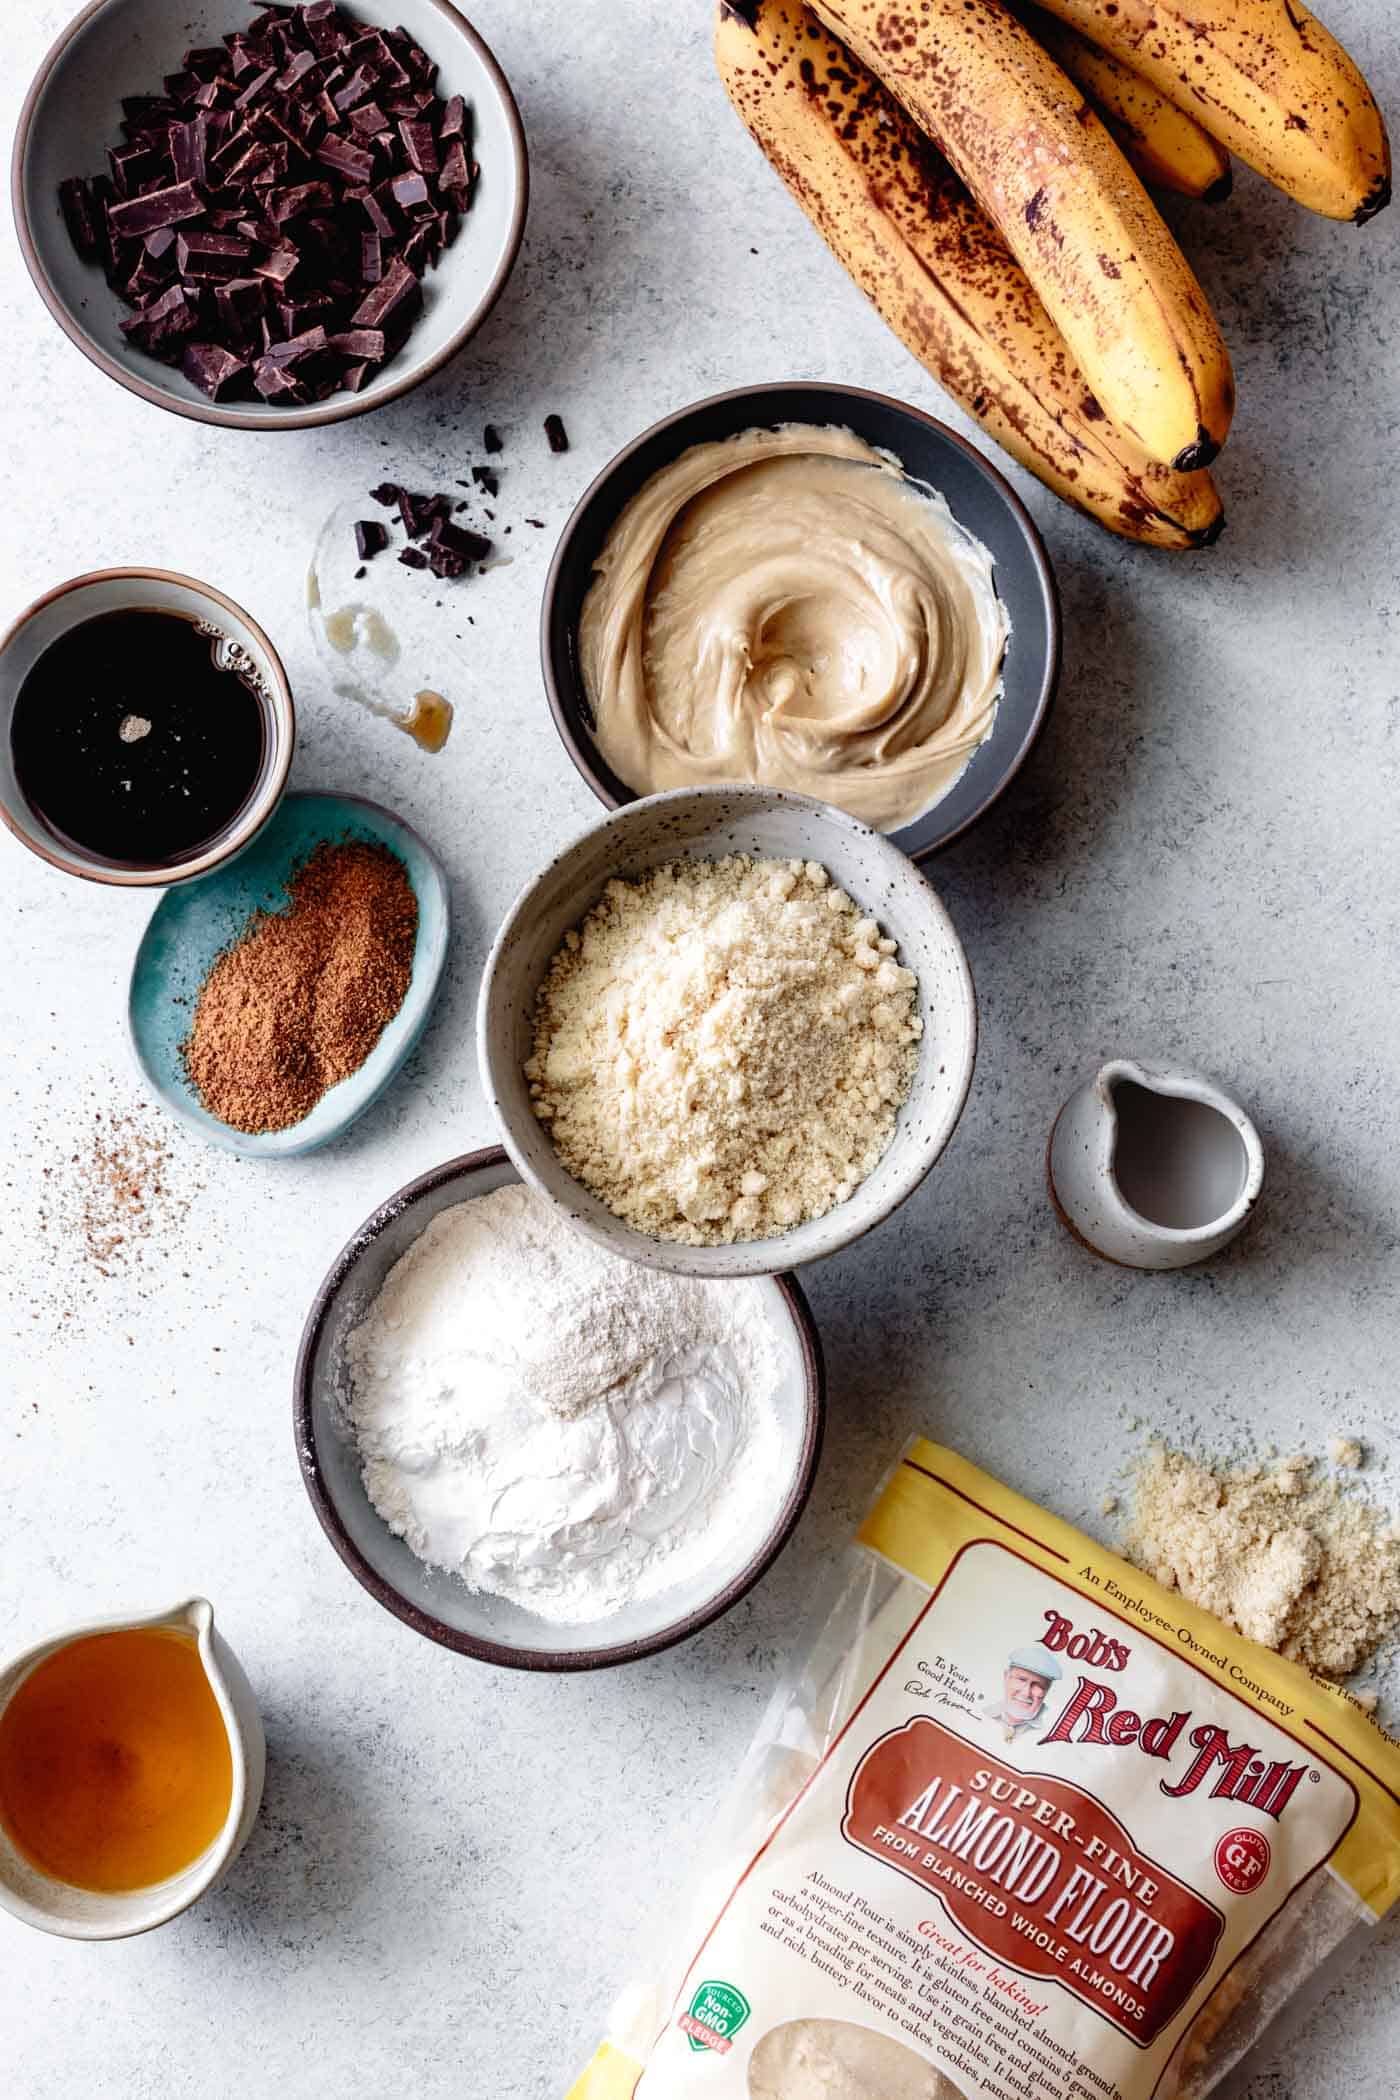 Ingredients for vegan paleo banana bread recipe with chocolate